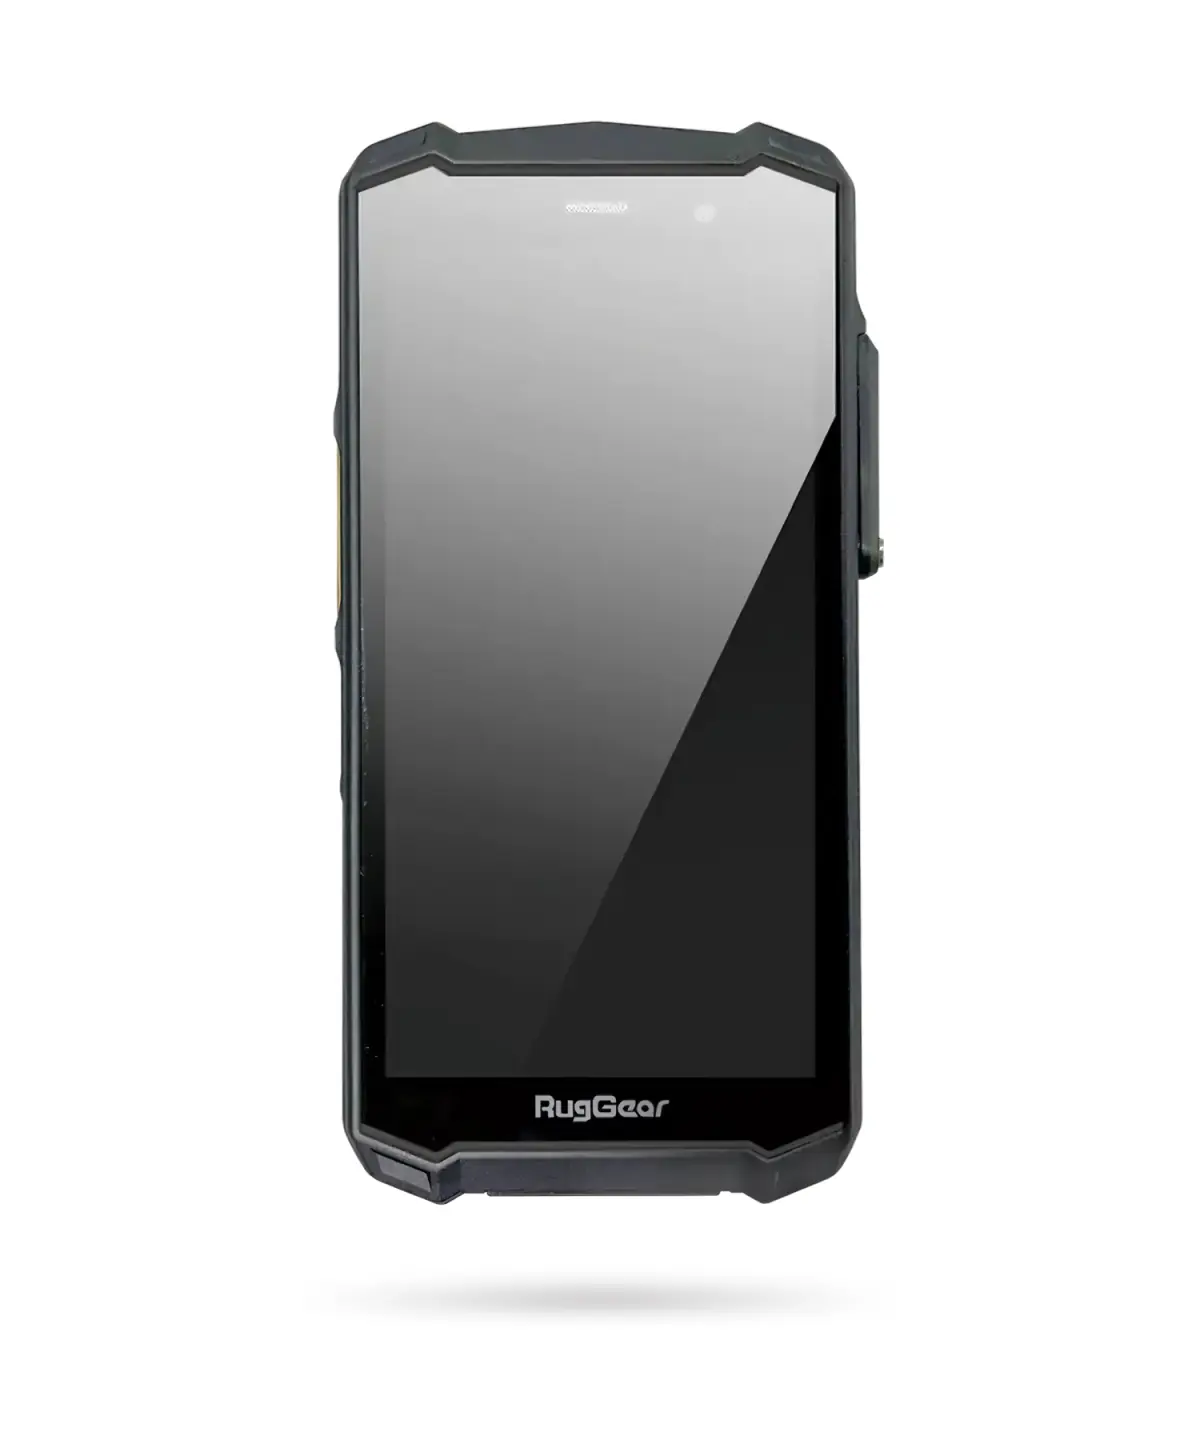 RugGear RG540 - Smartphone die een tablet vervangt